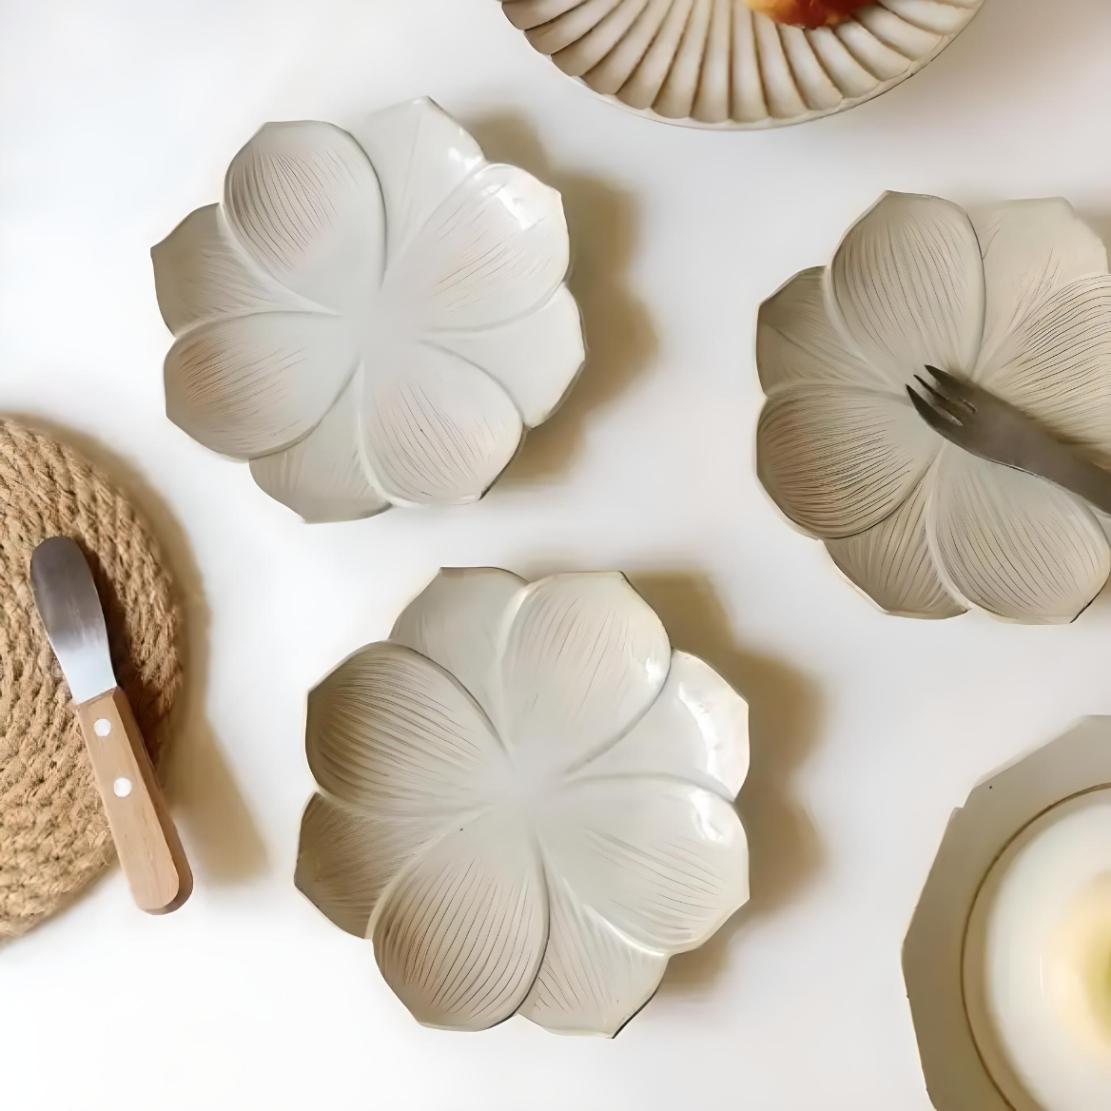 Small, ceramic lotus flower tableware plates